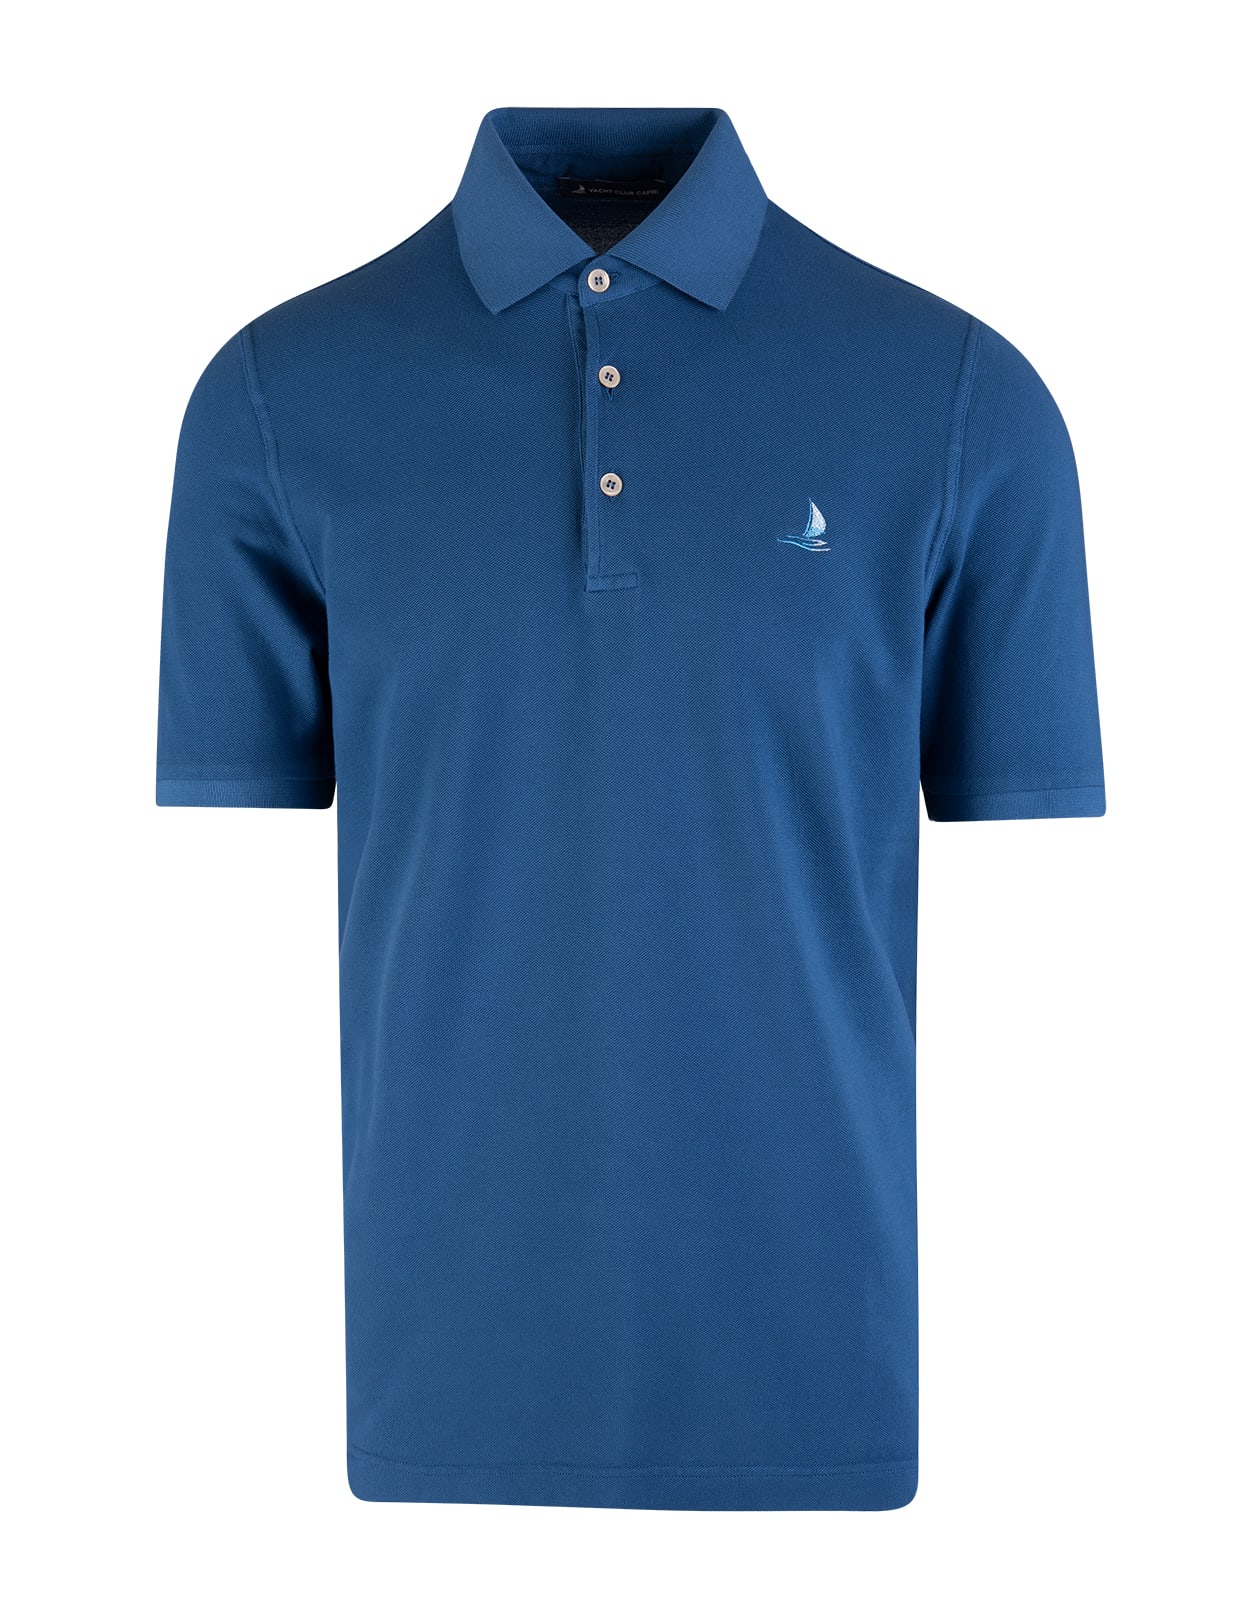 Fedeli Man - Royal Blue Pique Polo Shirt With Yacht Club Capri Logo